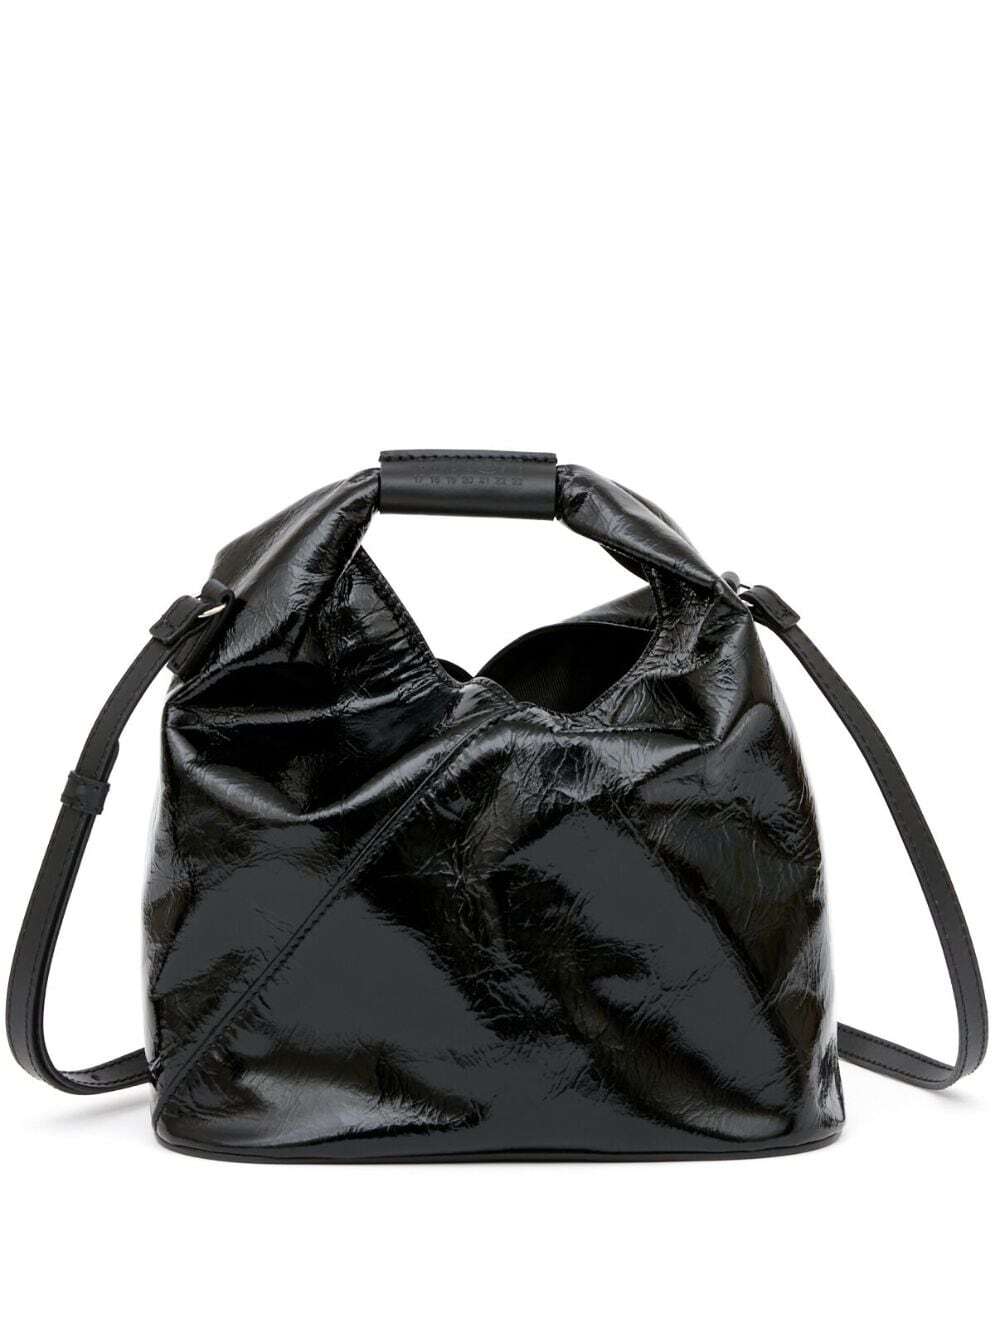 MM6 Maison Margiela leather triangle handbag - Black